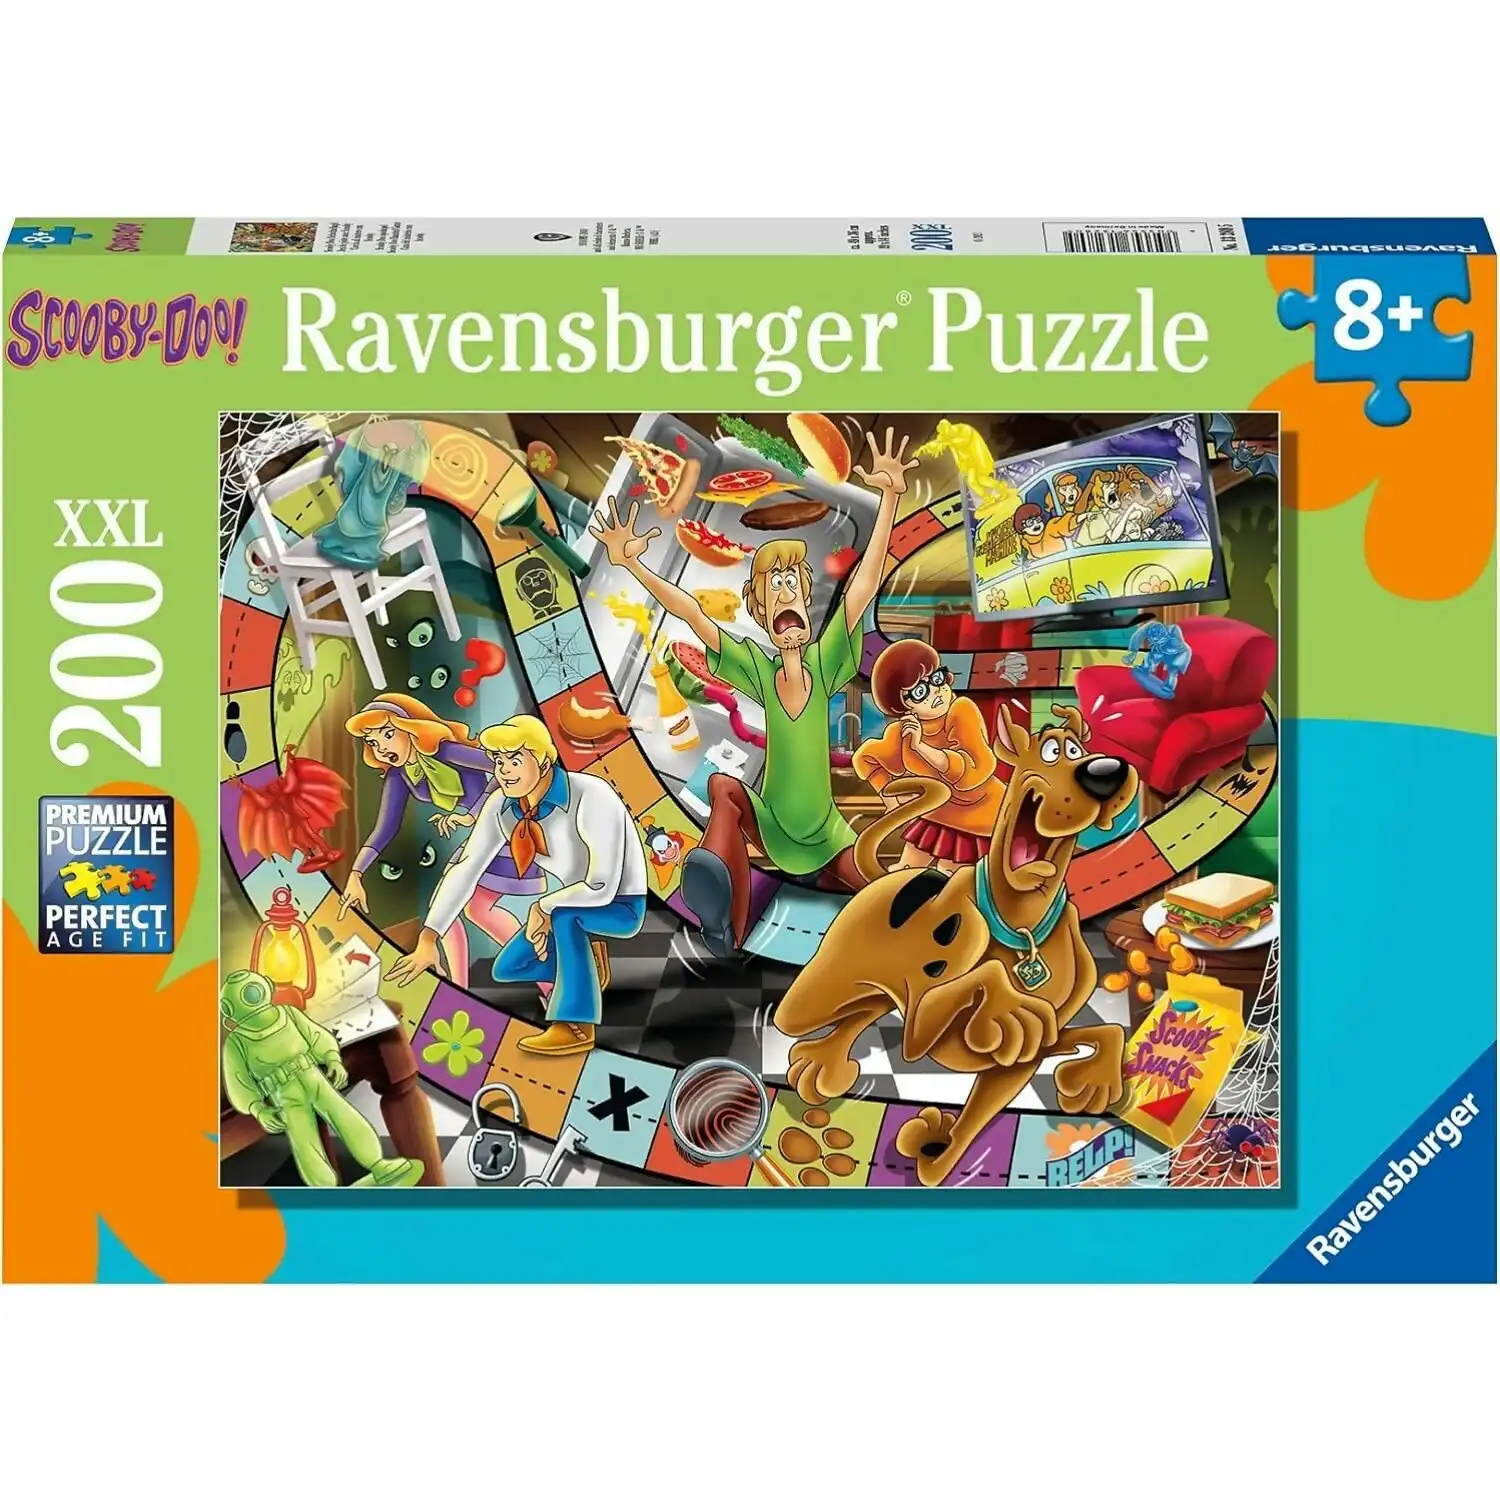 Ravensburger - Scooby Doo Haunted Jigsaw Puzzle XXL 200pc